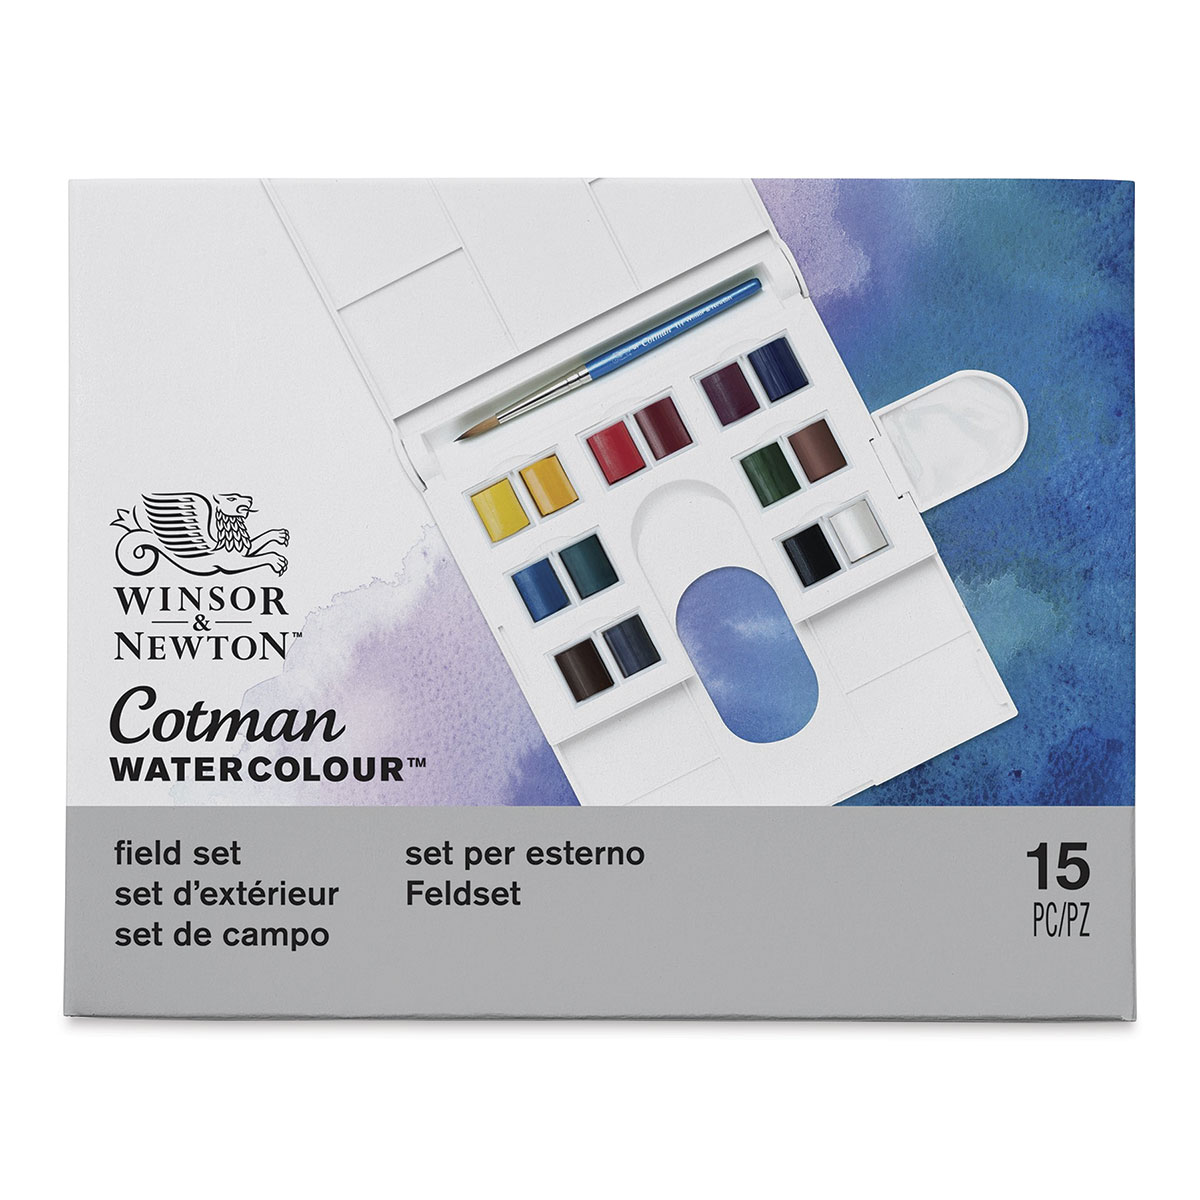 Winsor & Newton Cotman Watercolors -Compact Set, Assorted Colors, Set of  14, Half pans